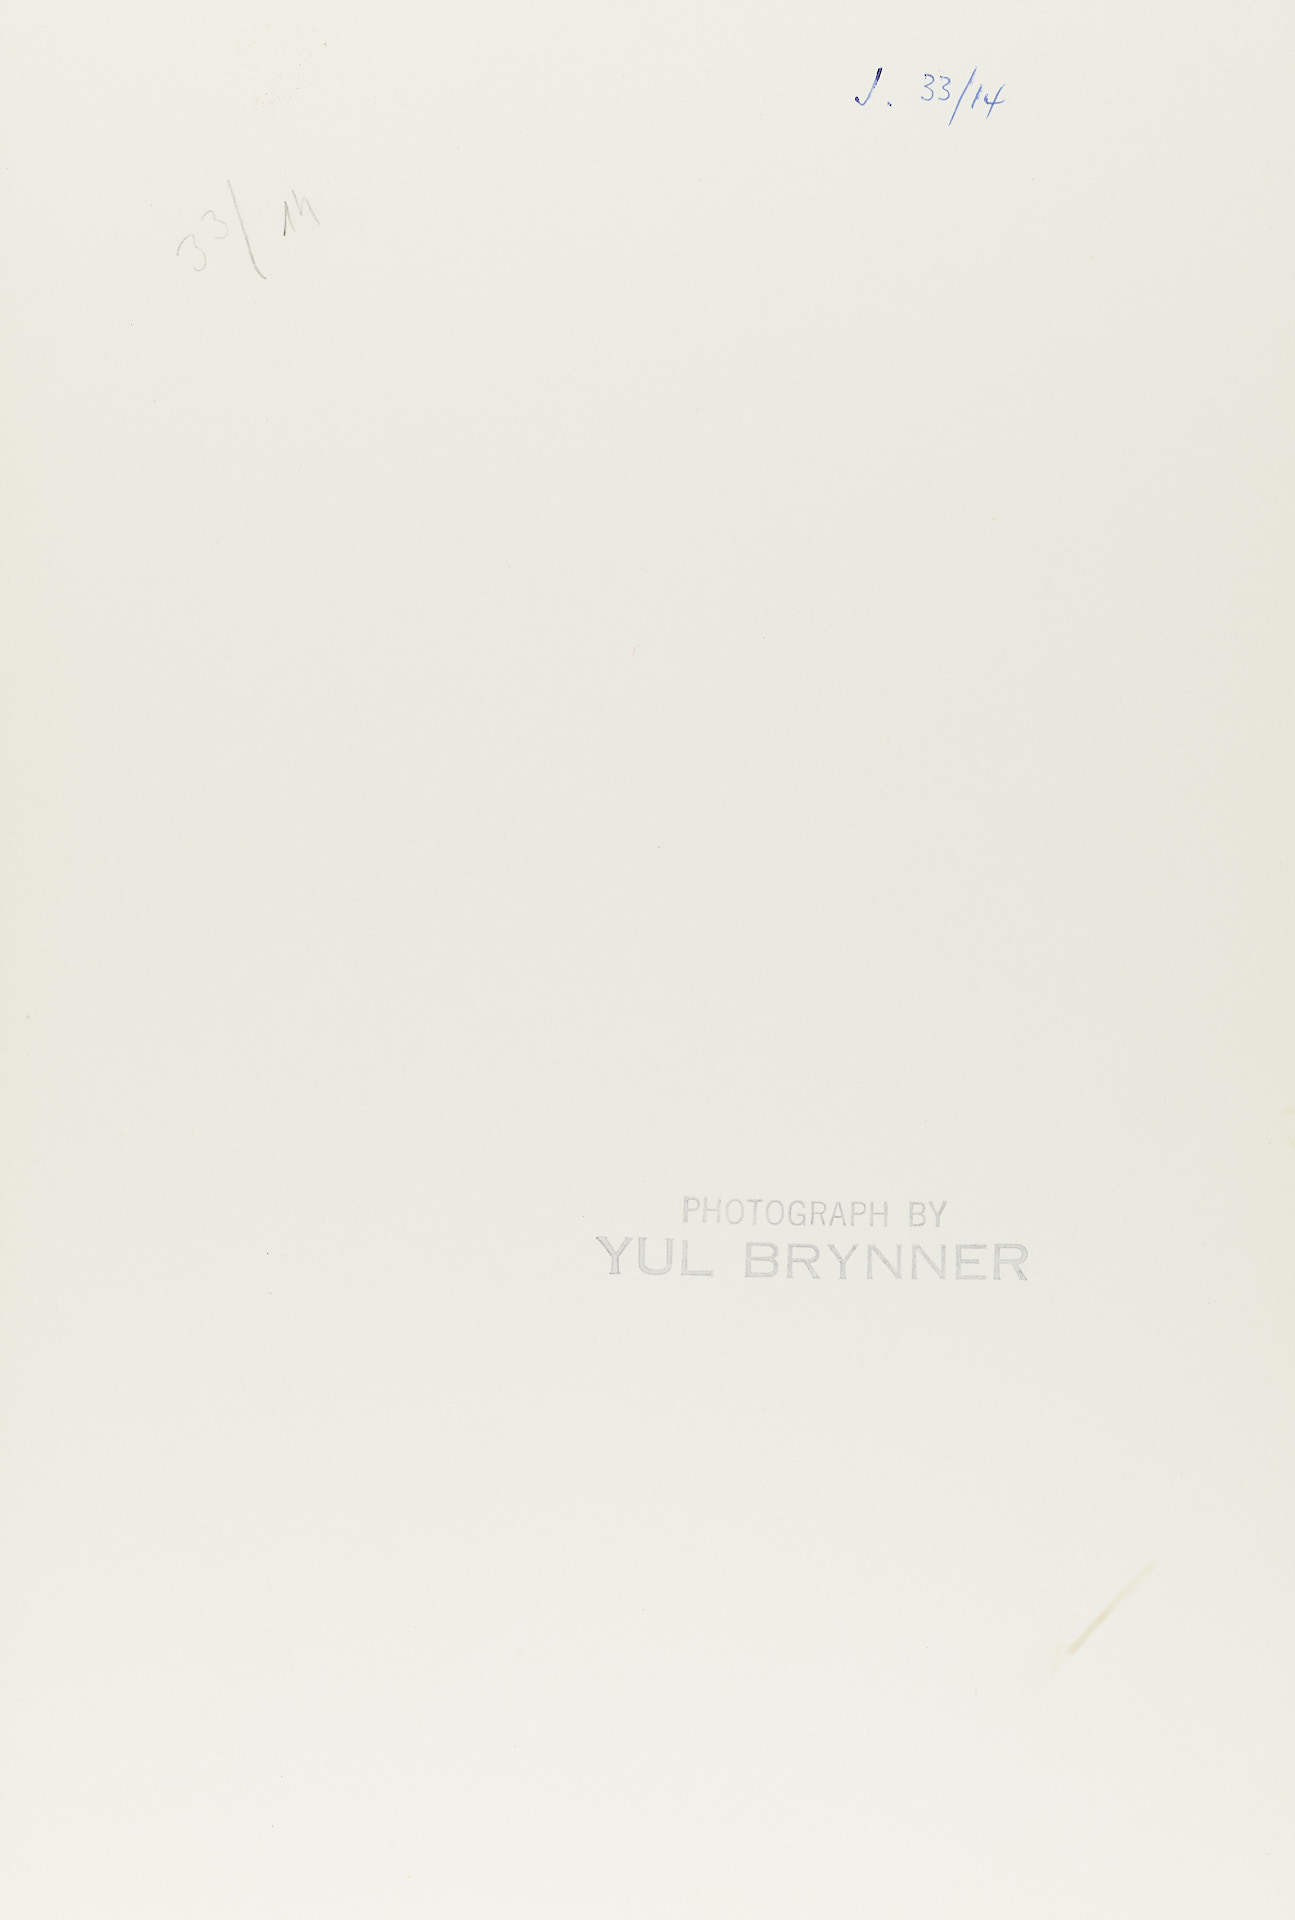 YUL BRYNNER (1920–1985) - Deborah Kerr on the set of "The Journey", Vienna 1957*